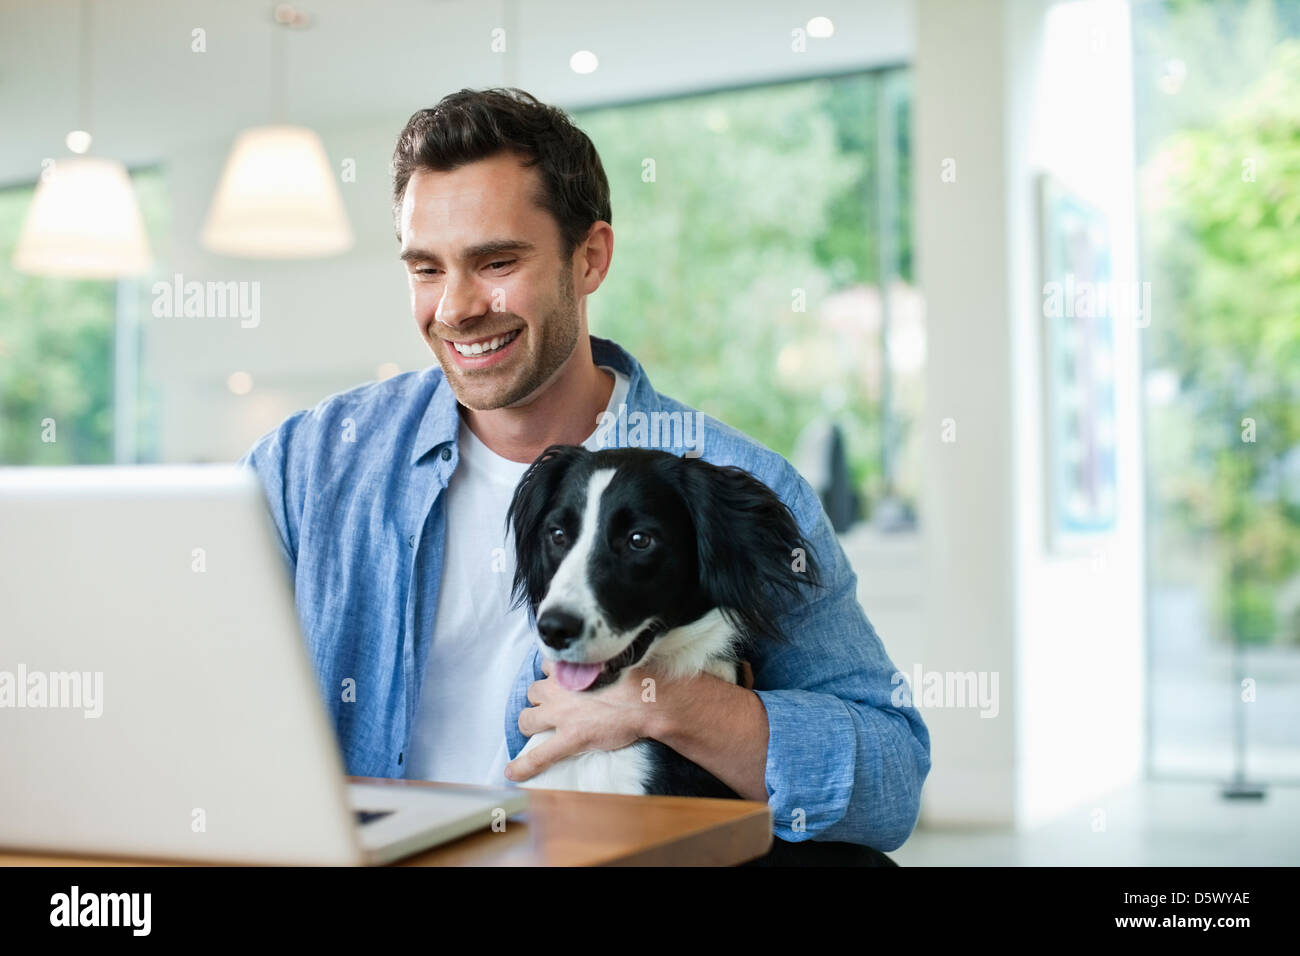 Man with dog on lap using laptop Stock Photo